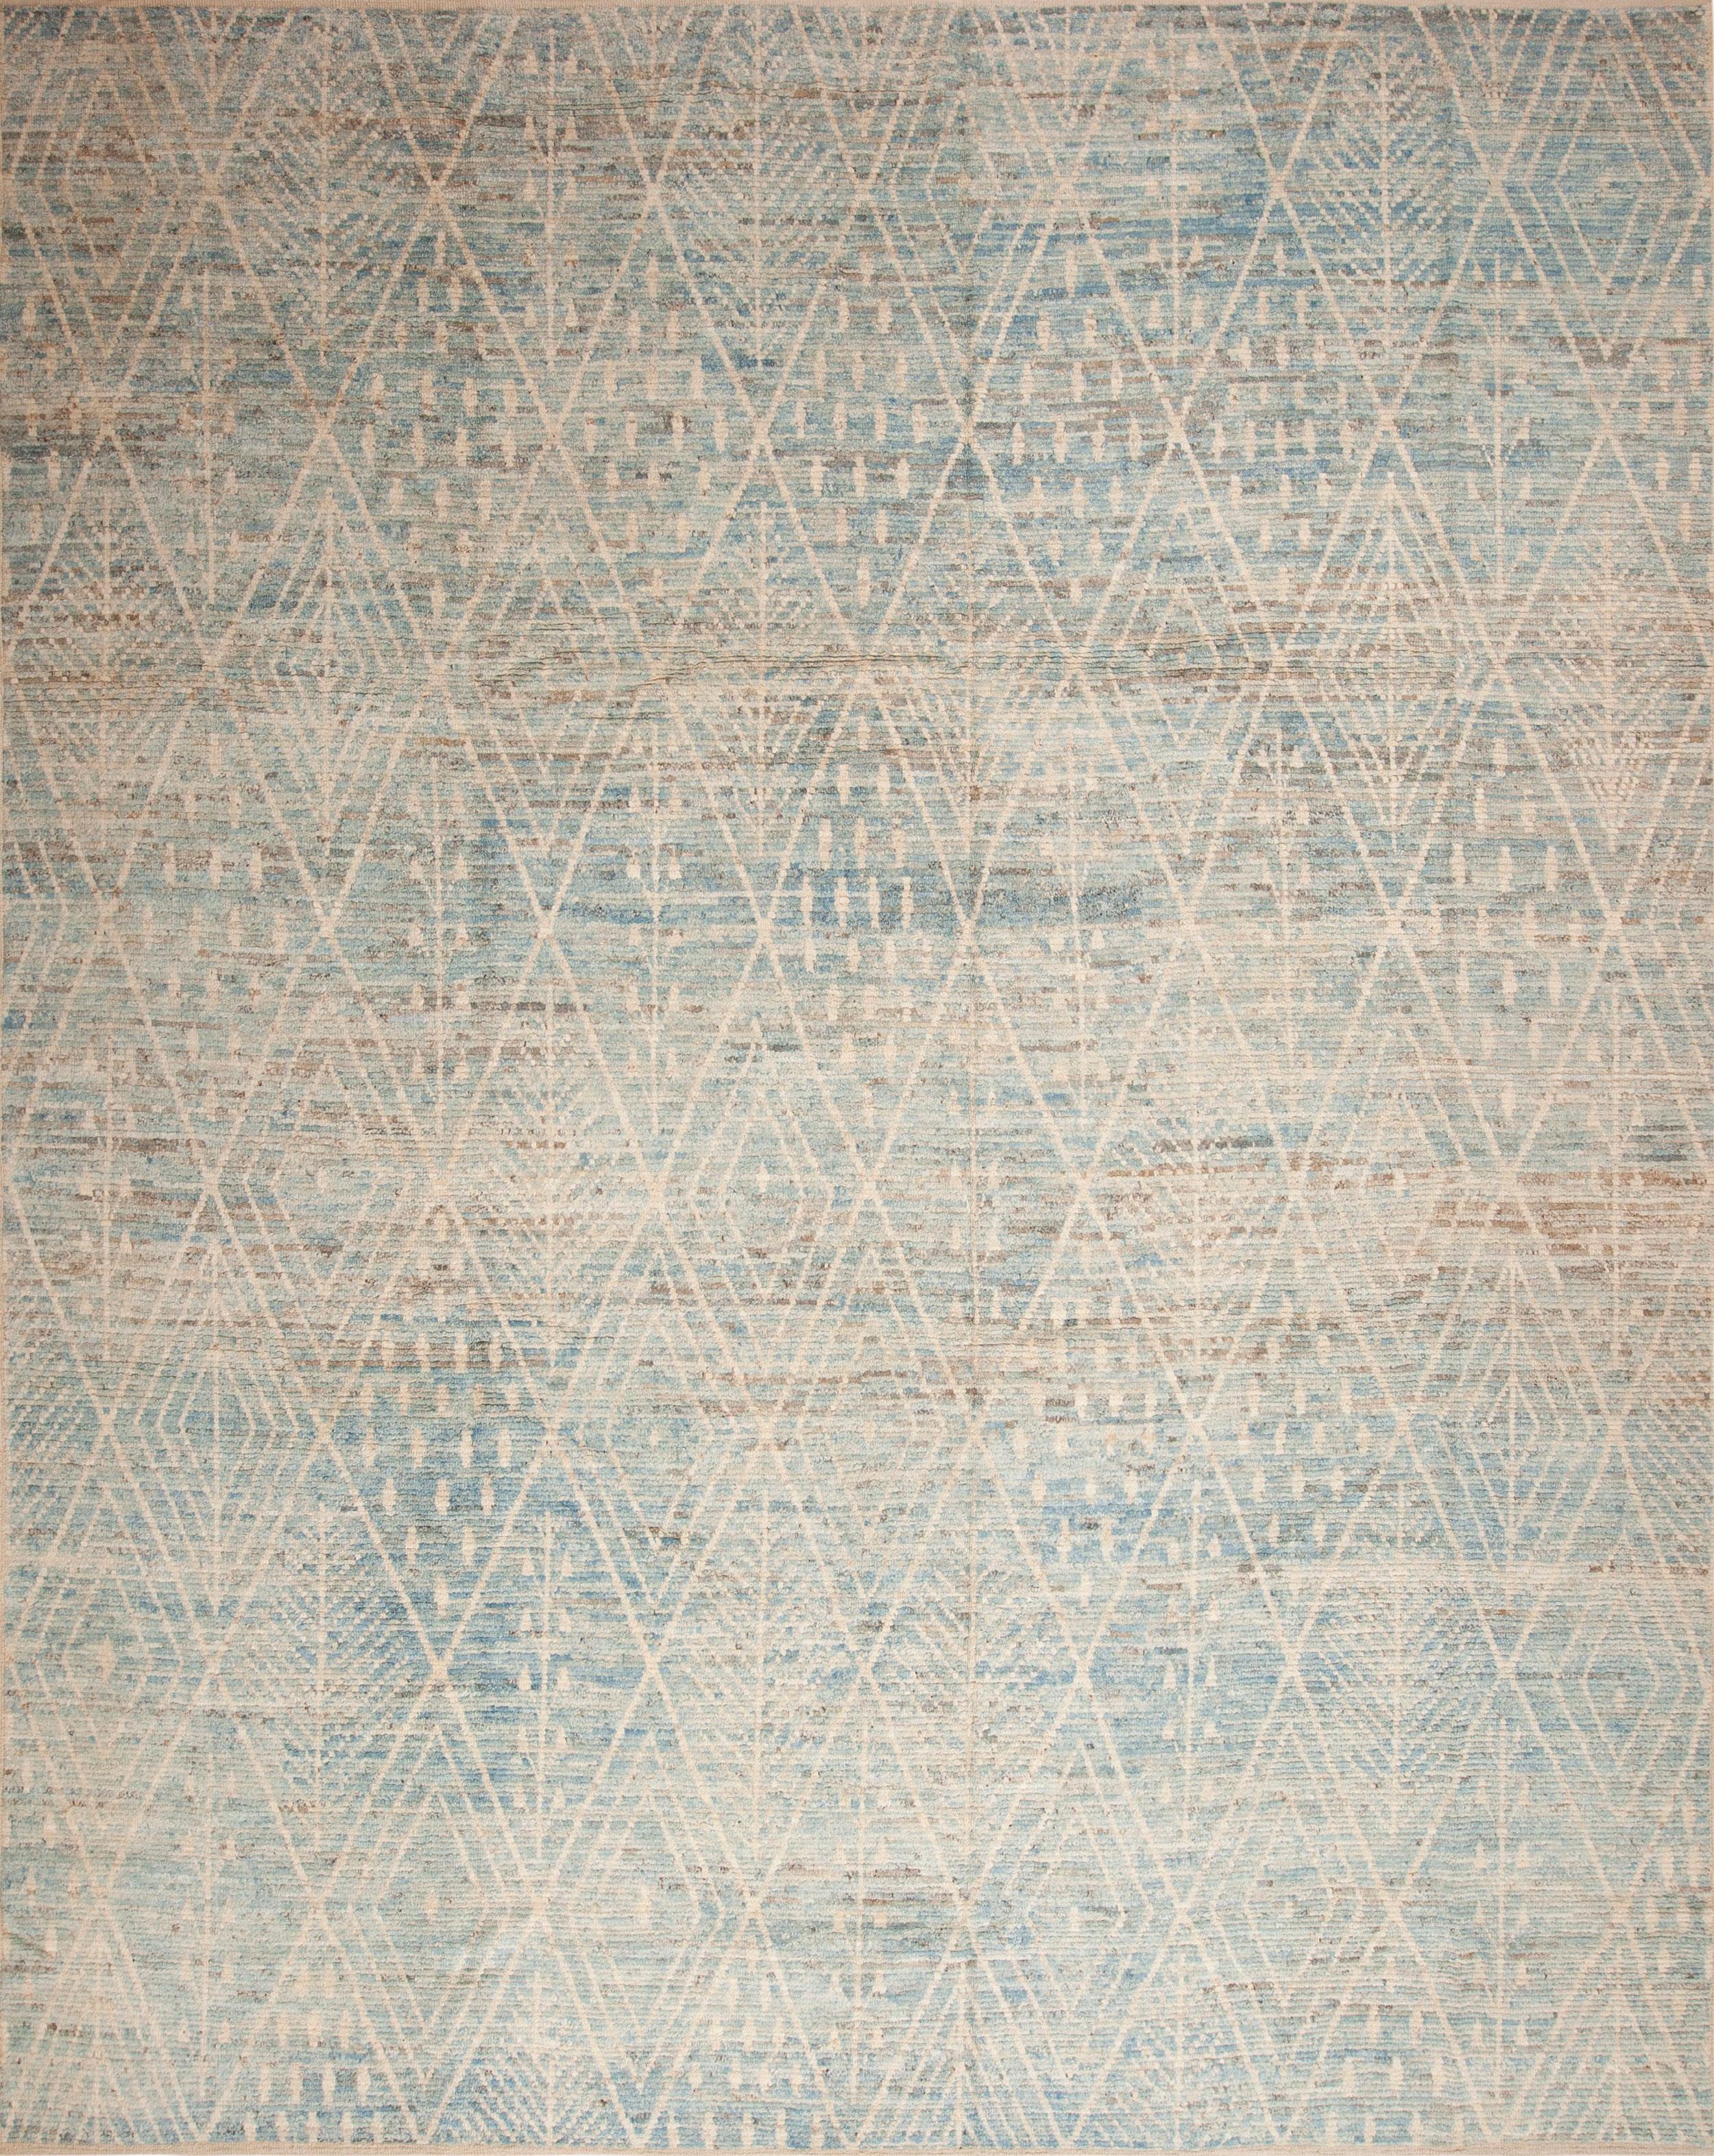 Centrasiatique Collection Nazmiyal - Grand tapis Beni Ourain marocain tribal et moderne de 12' x 15' en vente